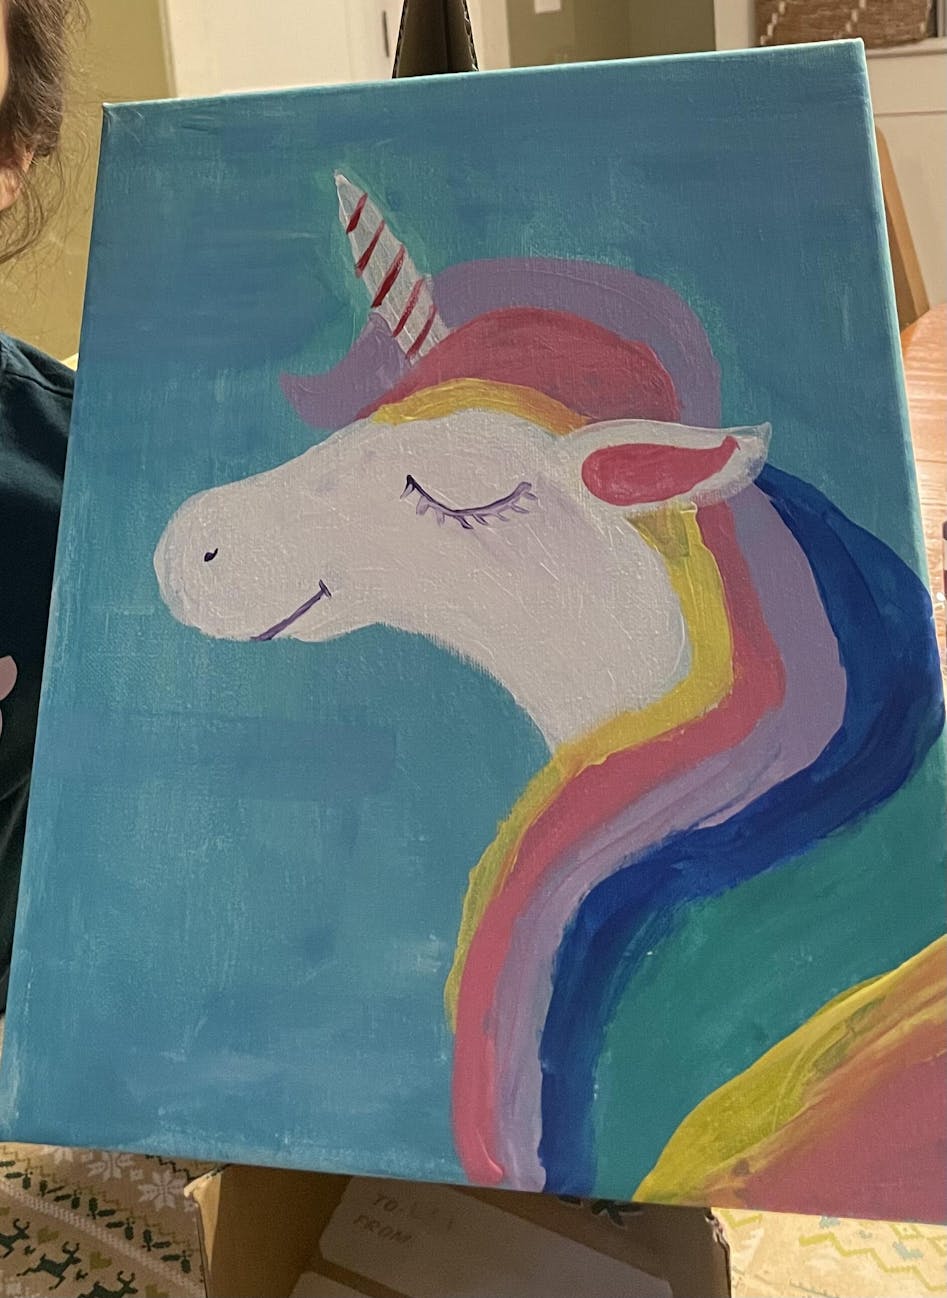 litokido Art Supplies for Kids - Unicorn Art Set - Painting